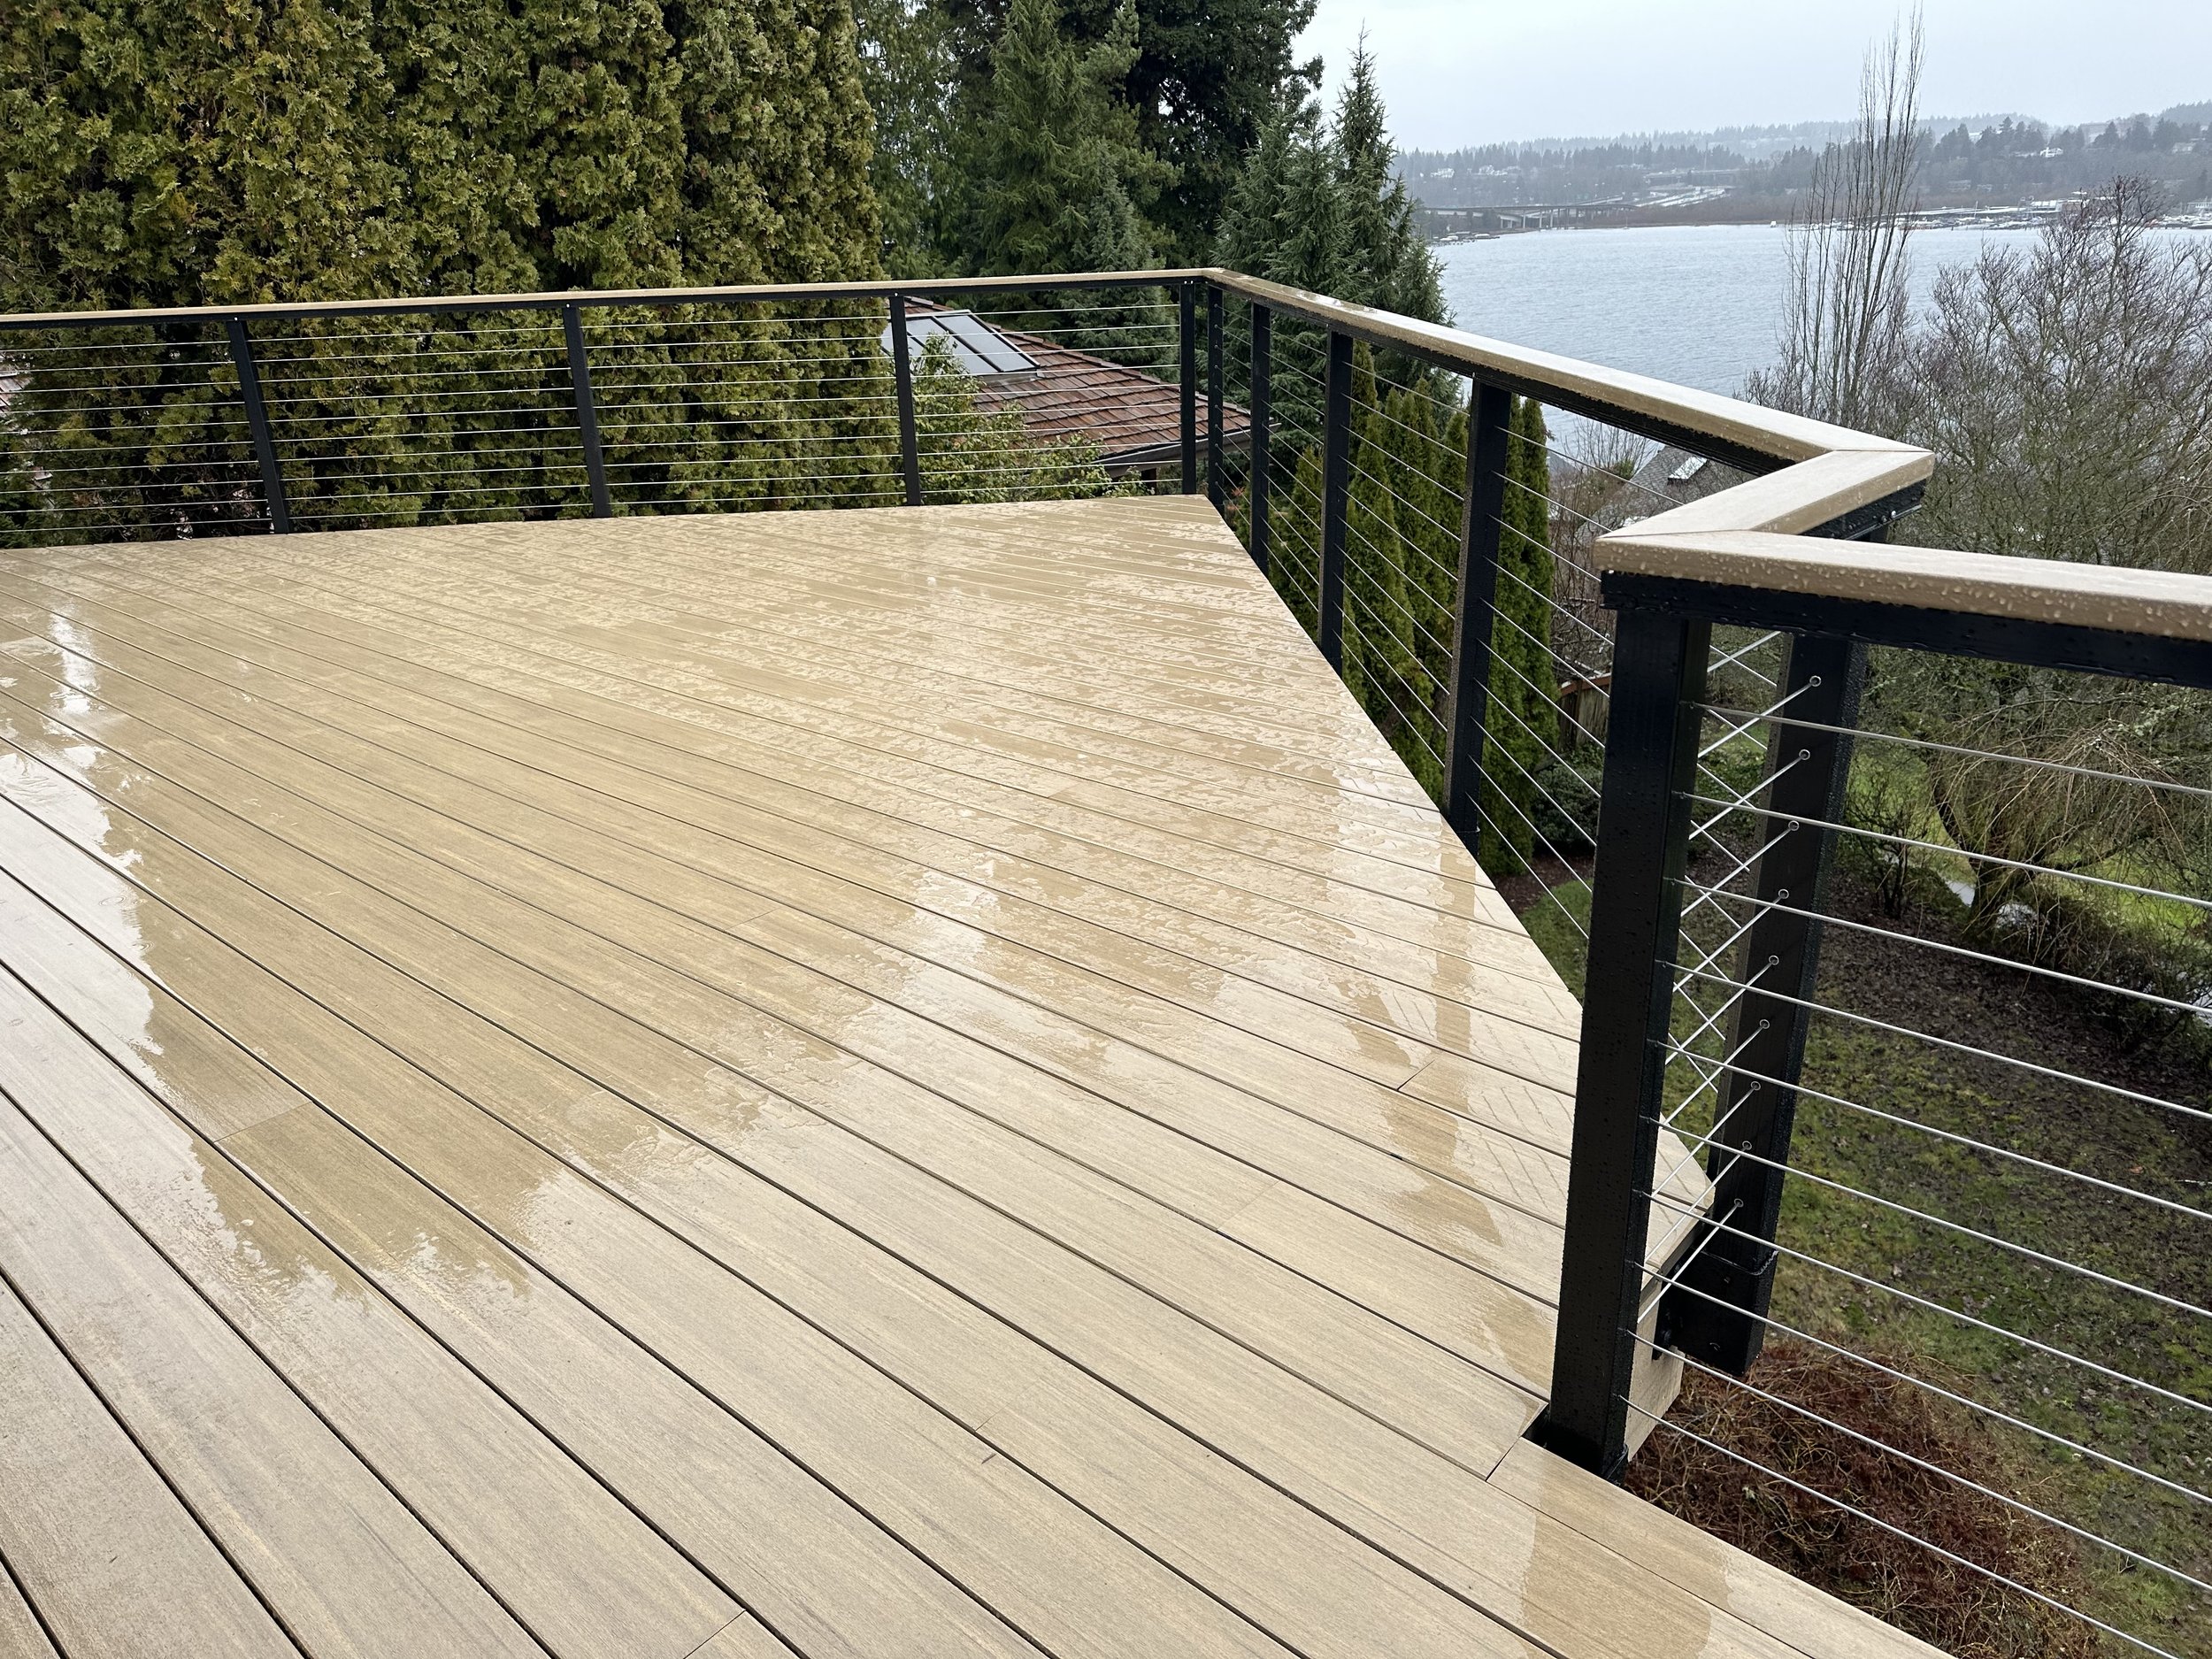  deck, outdoor living, summer, Baklinski Home Improvement, deck contractors, deck service, Mercer Island, Seattle, Bellevue 